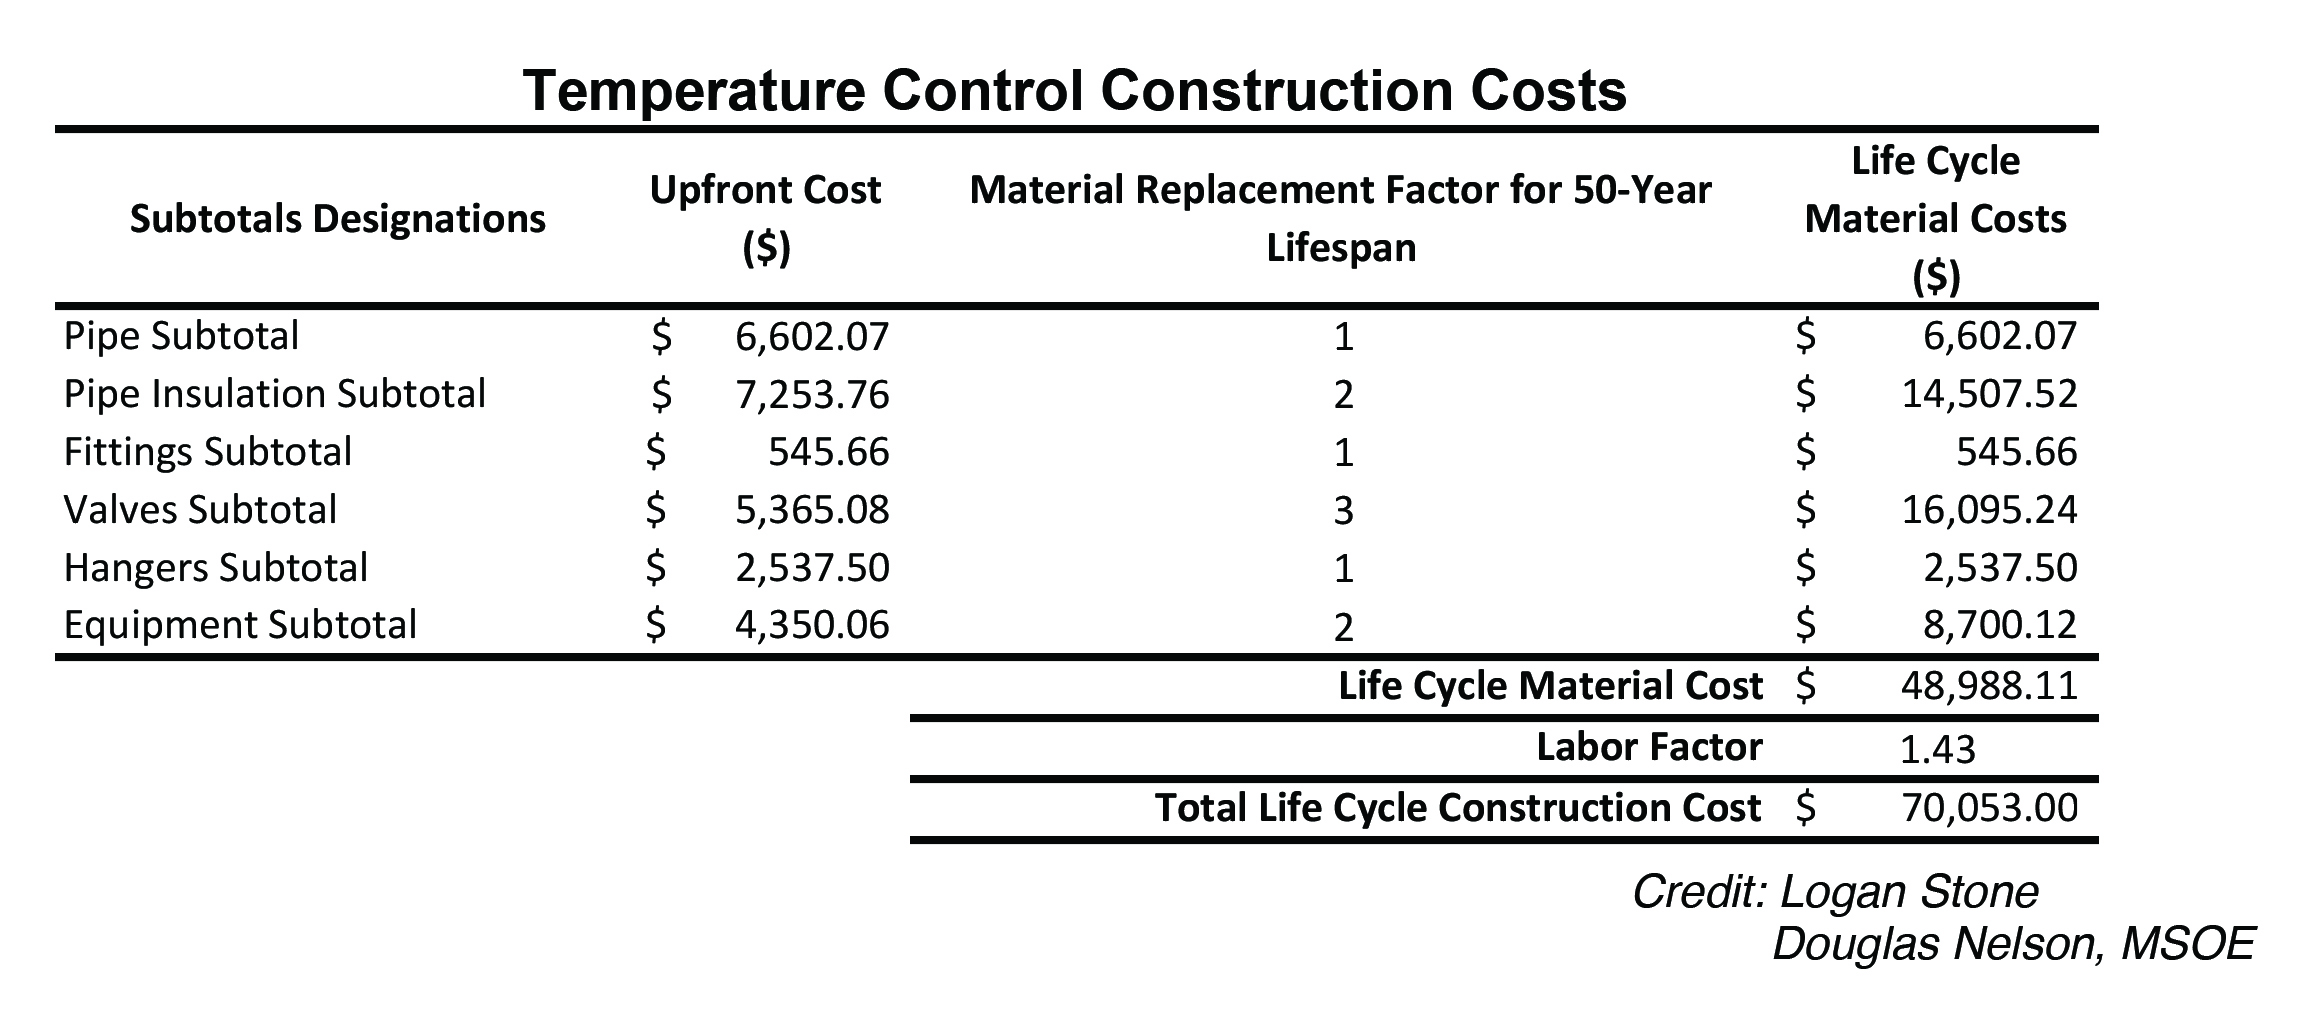 PE0322_Fig2-Temperature Control Construction Costs copy.jpg